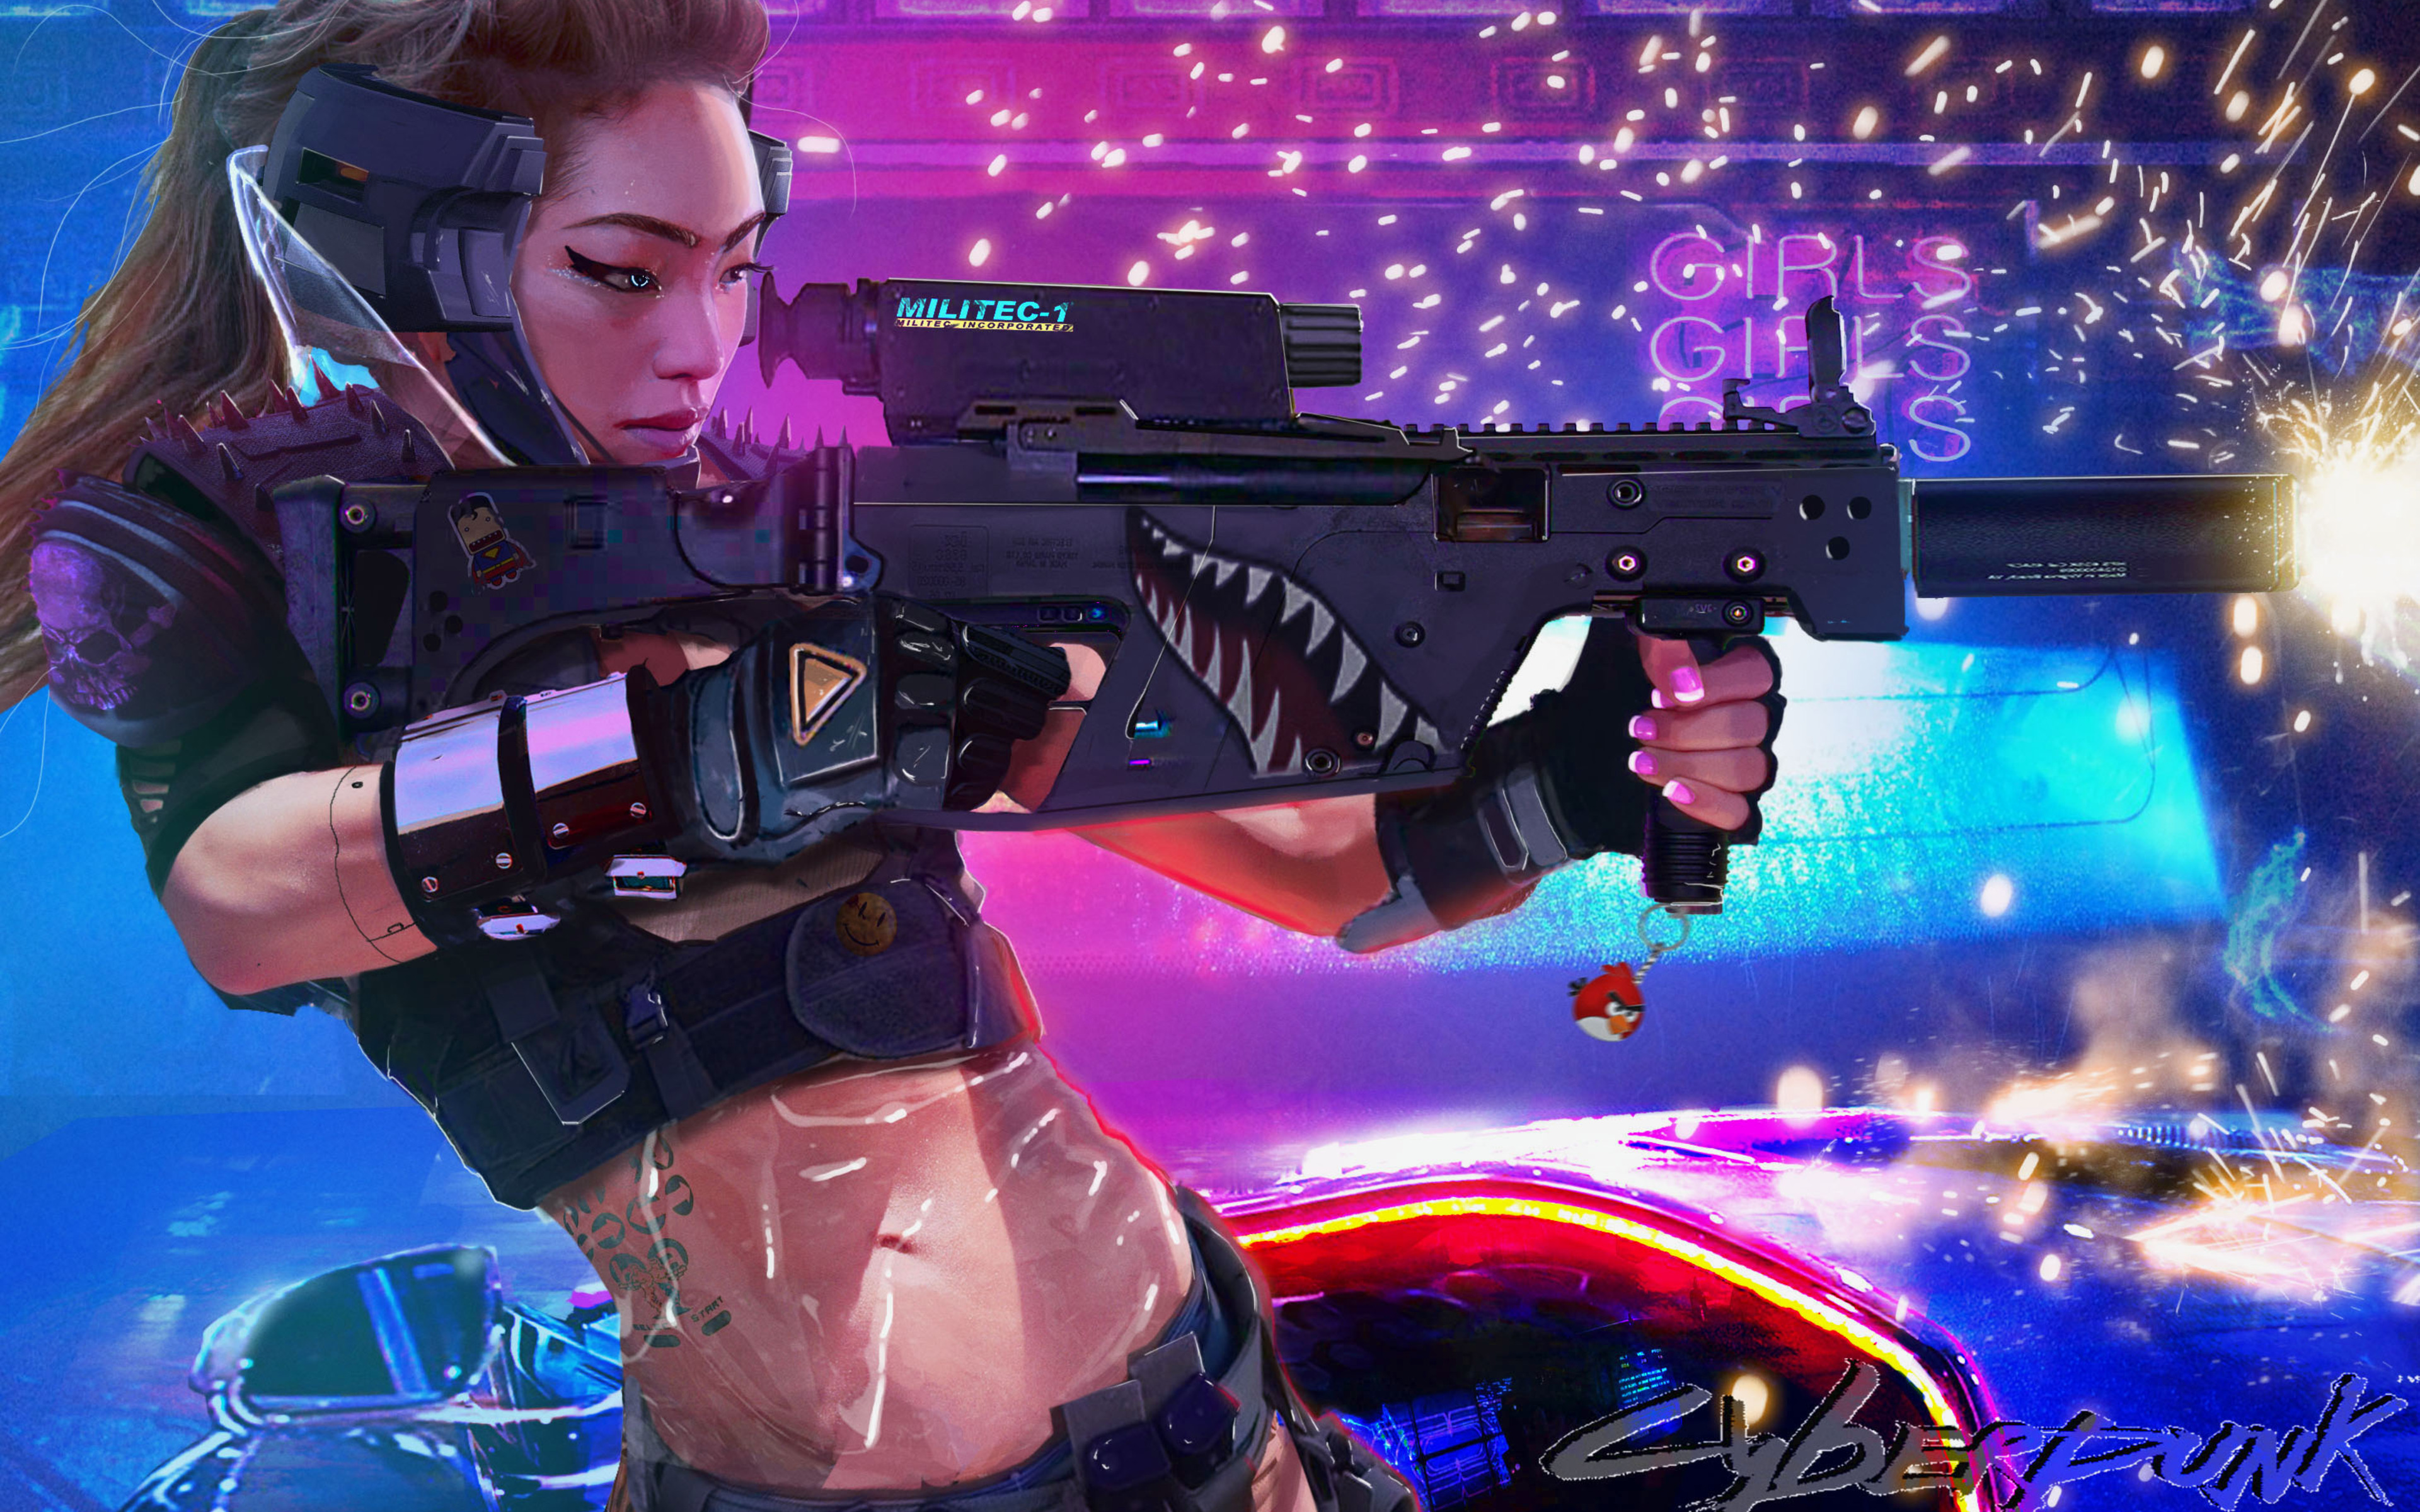 Women Digital Art Asian Weapon Cyberpunk Science Fiction Artwork Futuristic Crop Top Shooting Cyberp 3840x2400